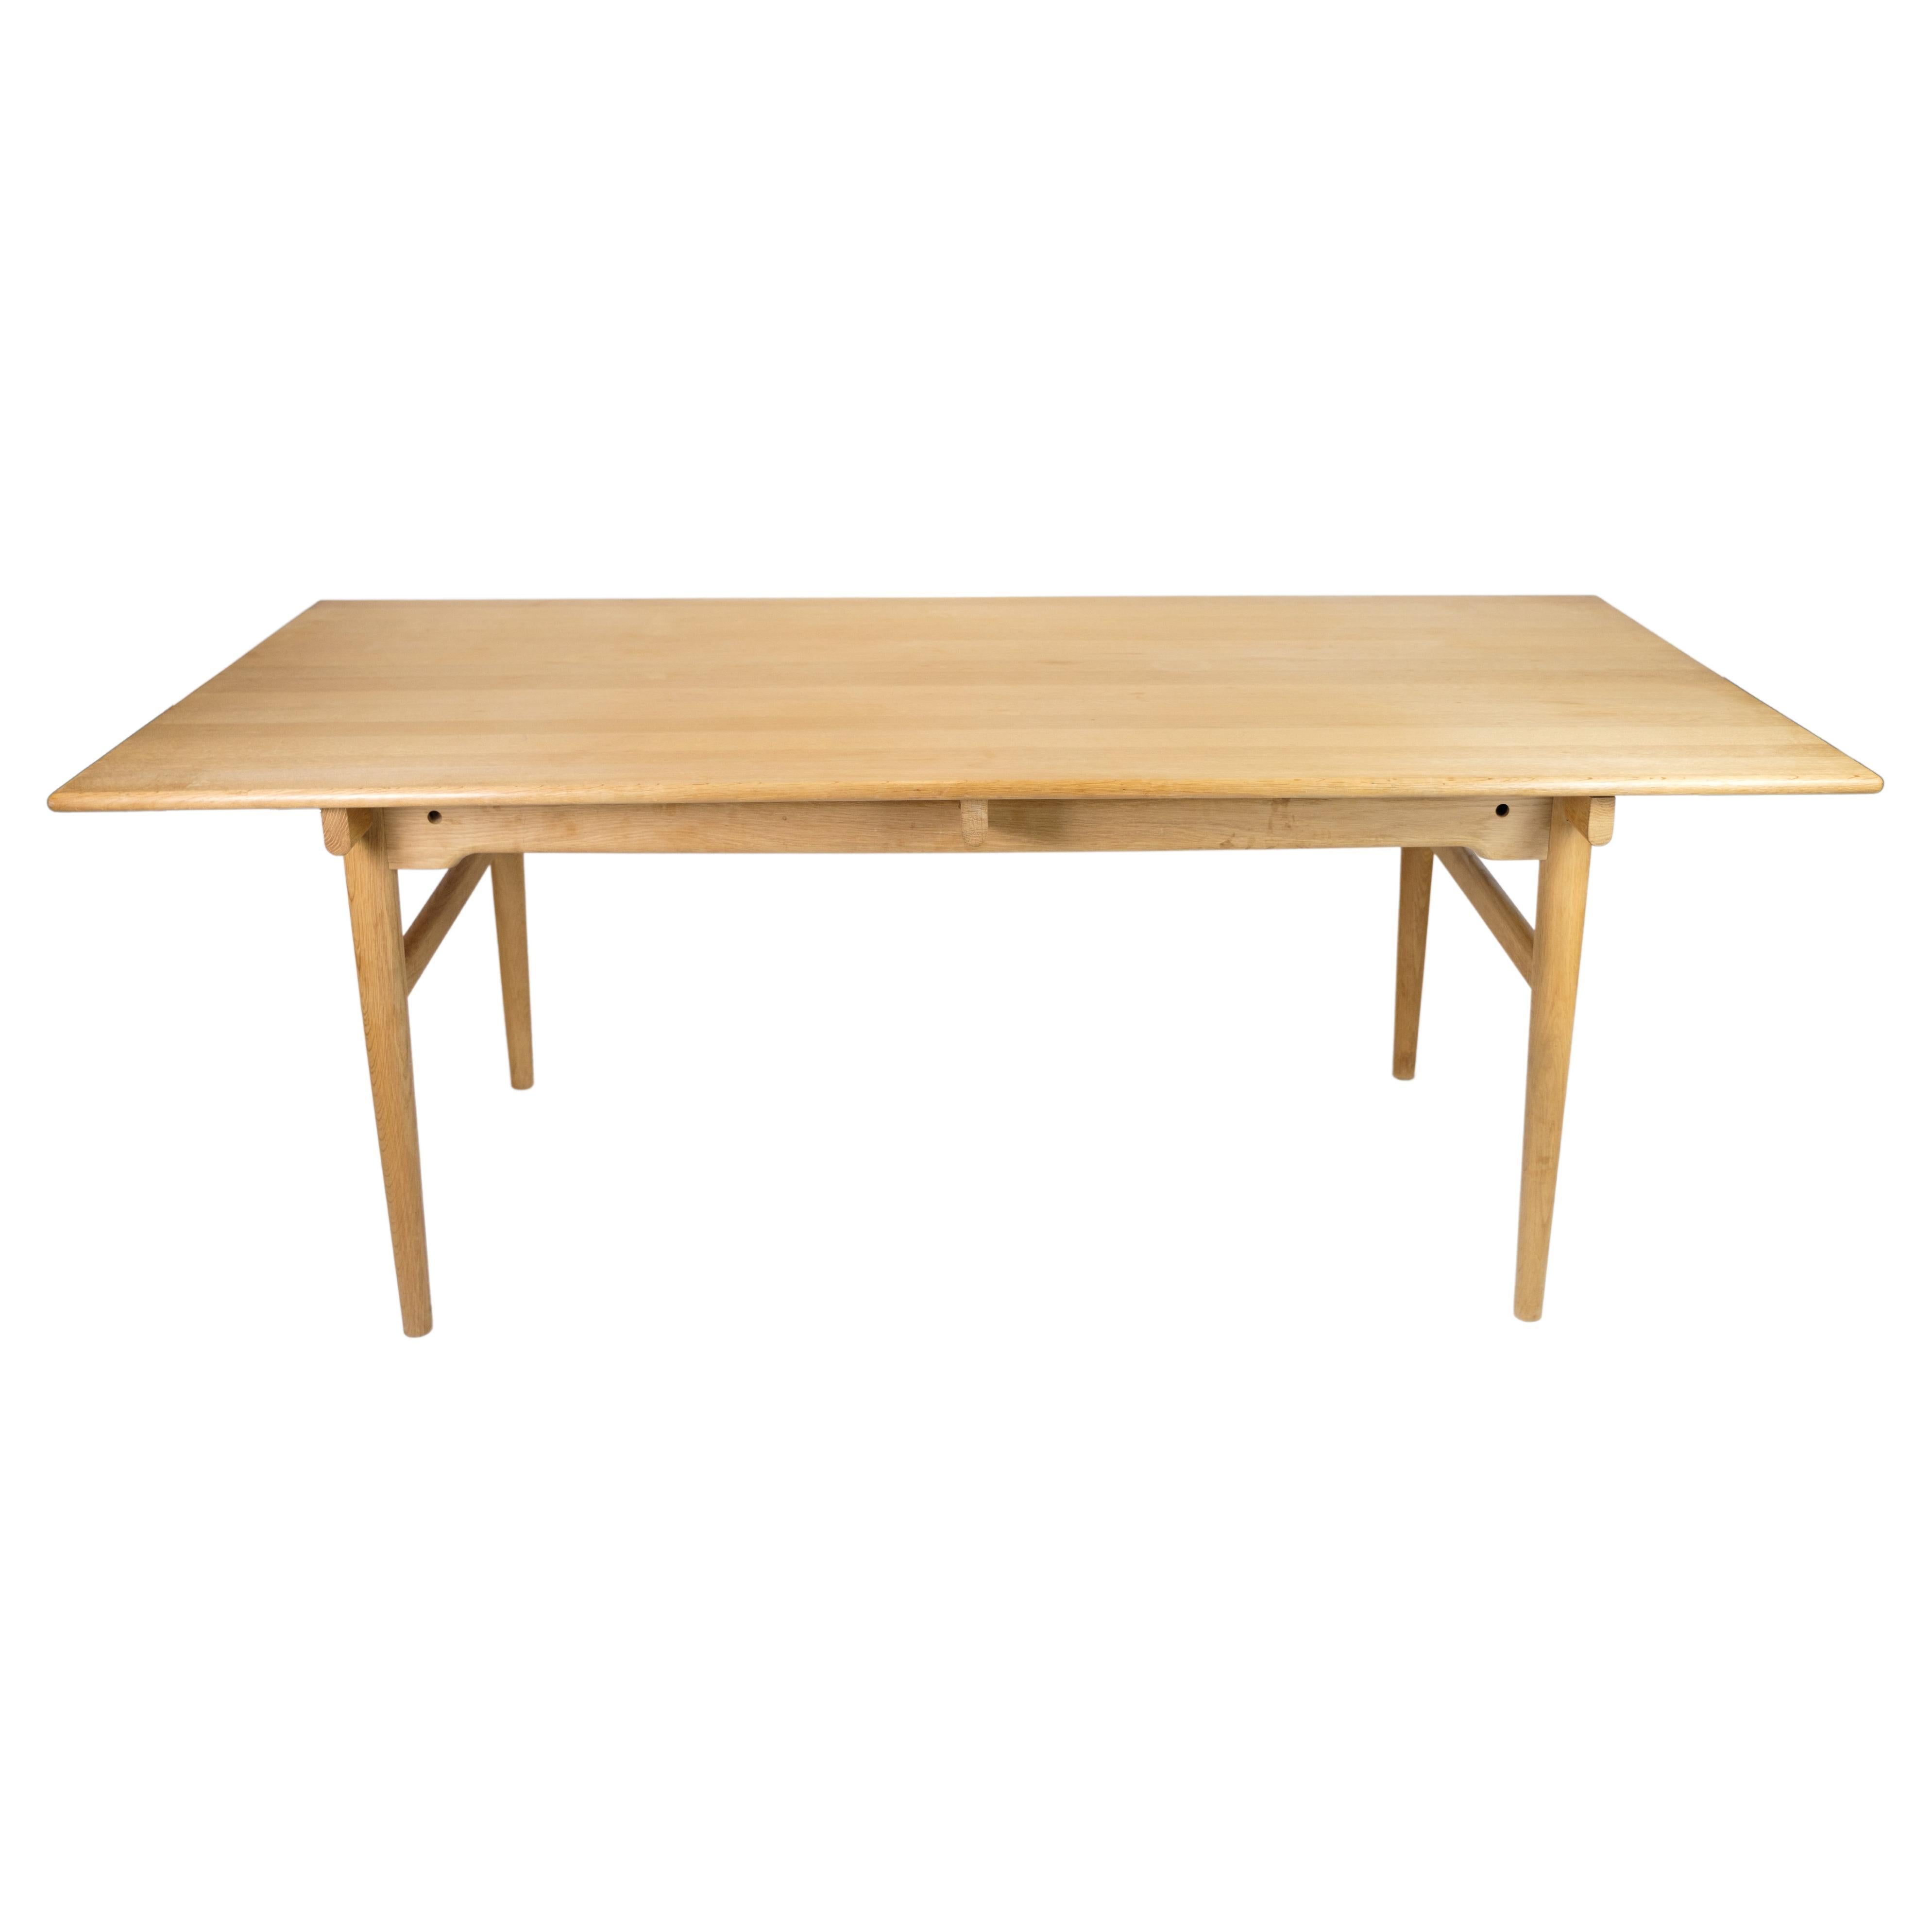 The CH327 dining table from Carl Hansen & Søn & Danish architect Hans J. Wegner 